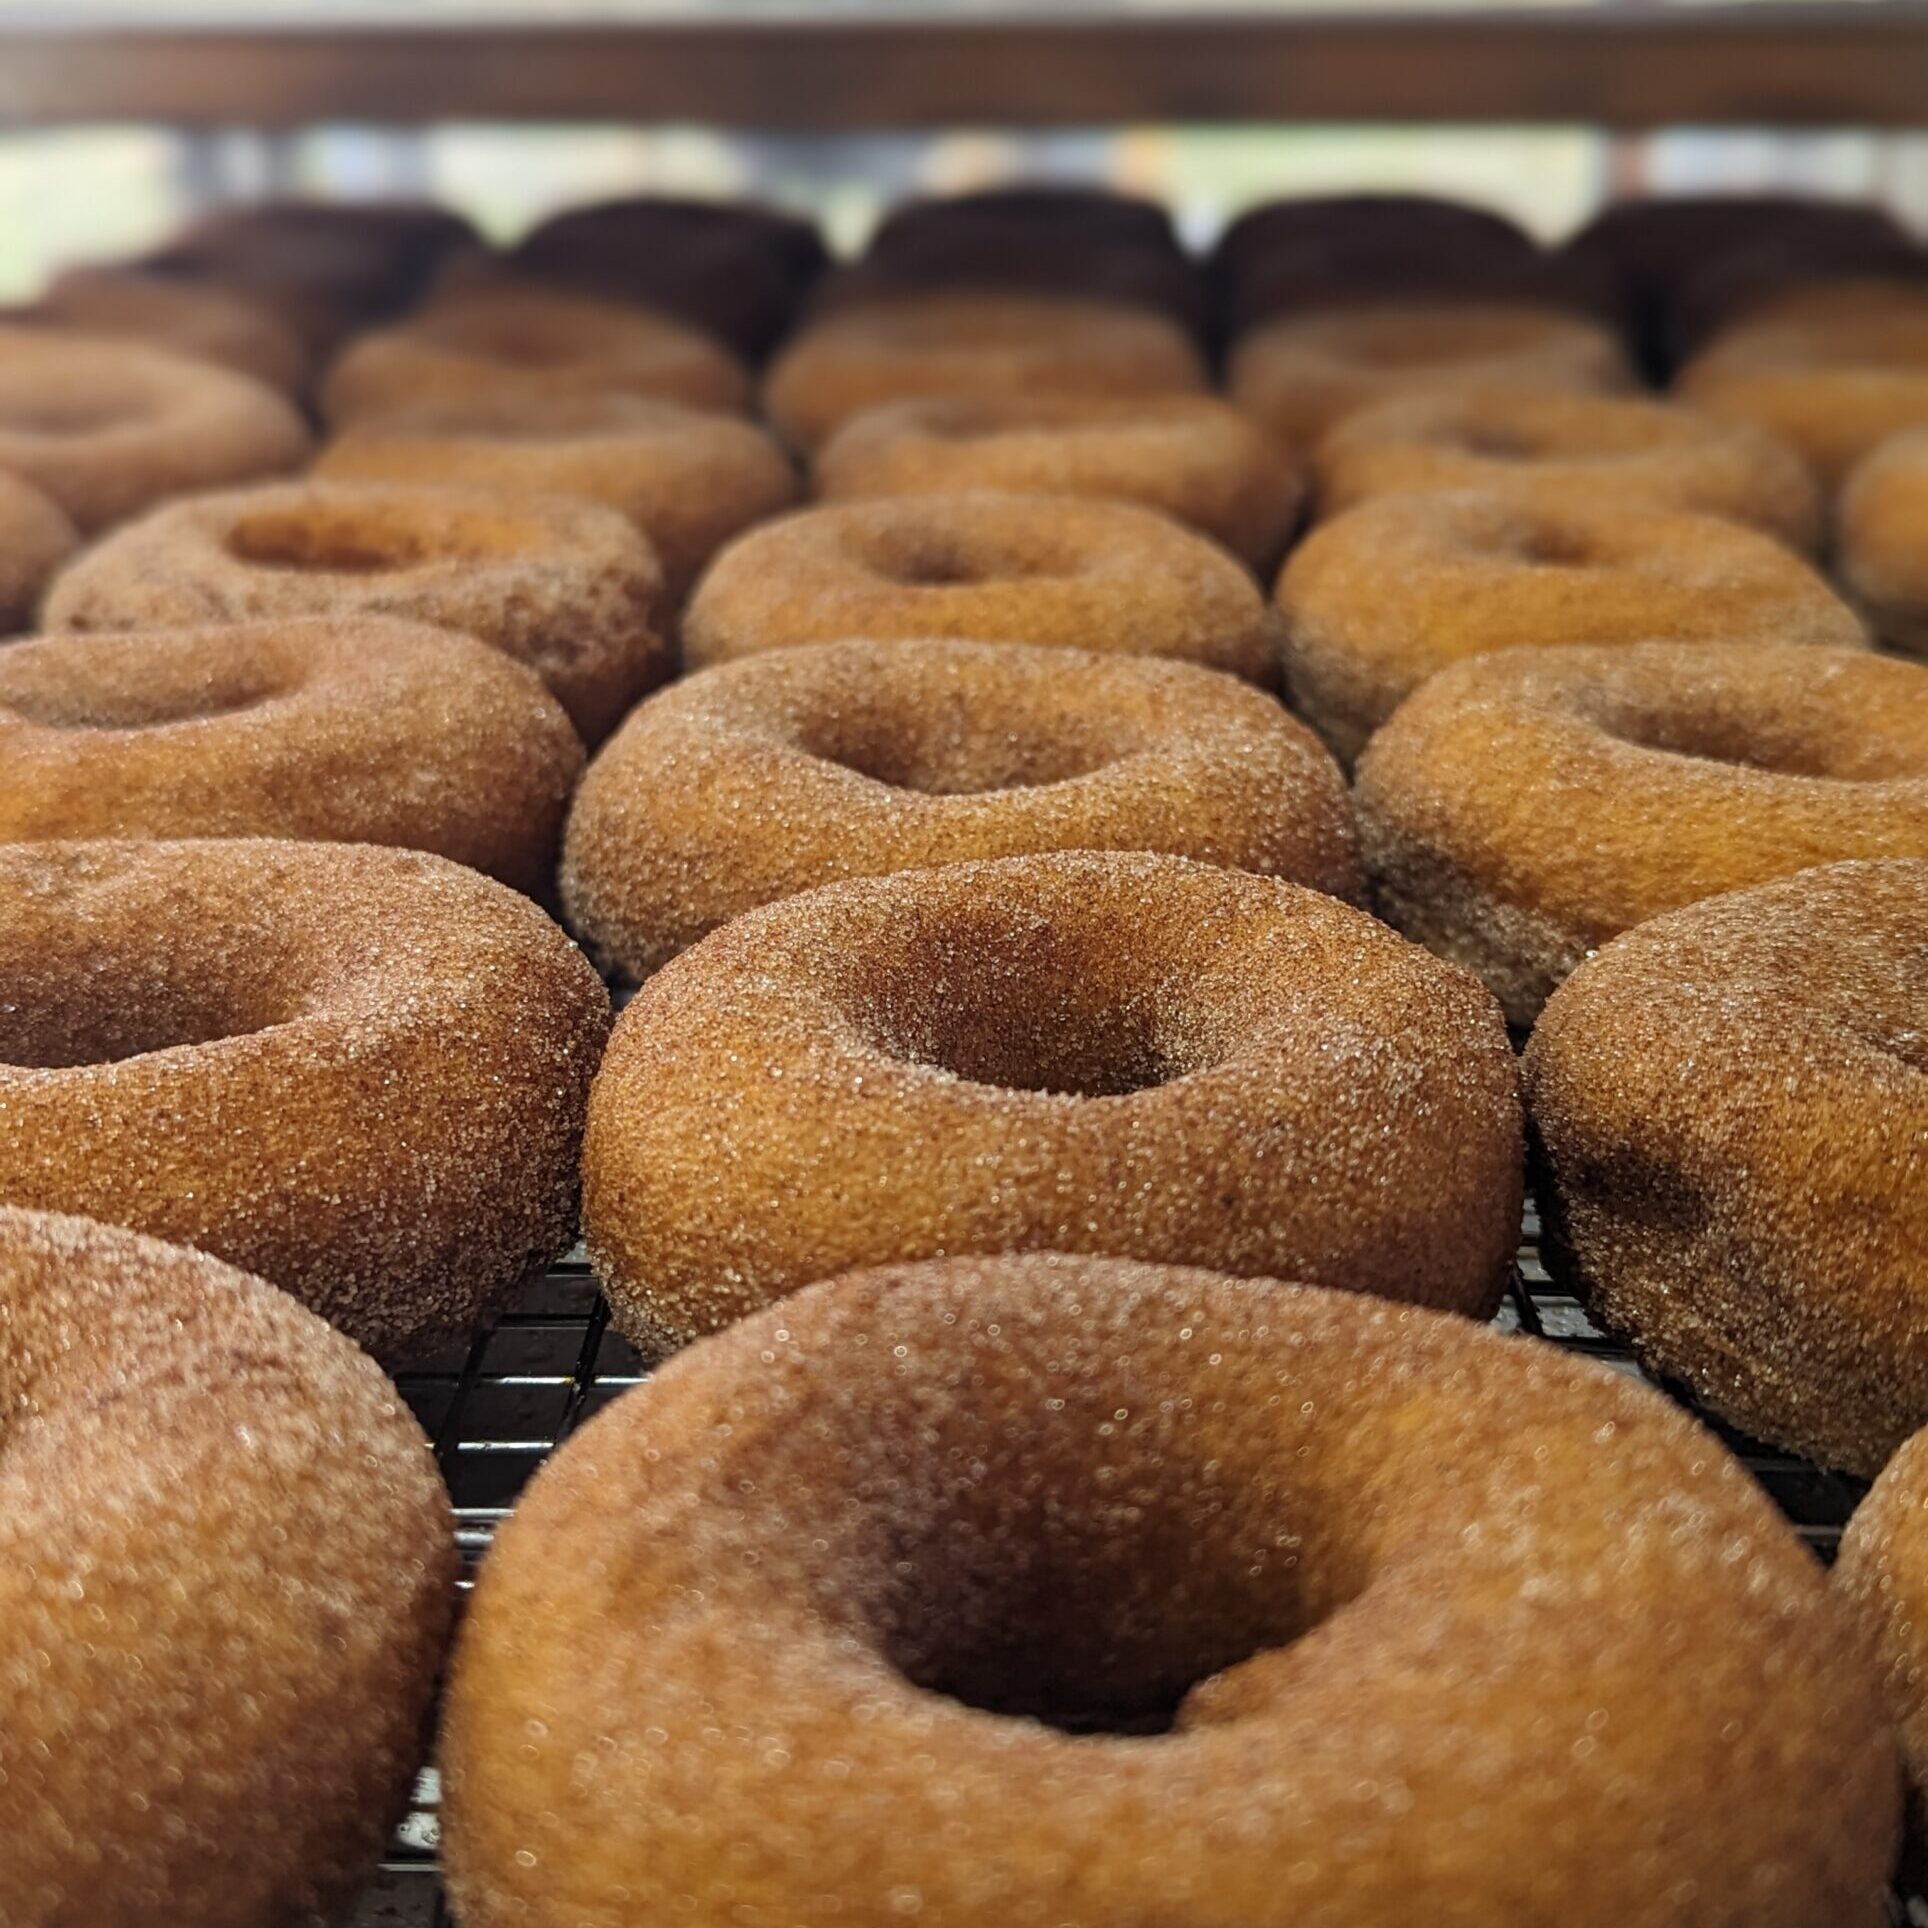 Enjoy our fresh pumpkin donuts. Made daily!